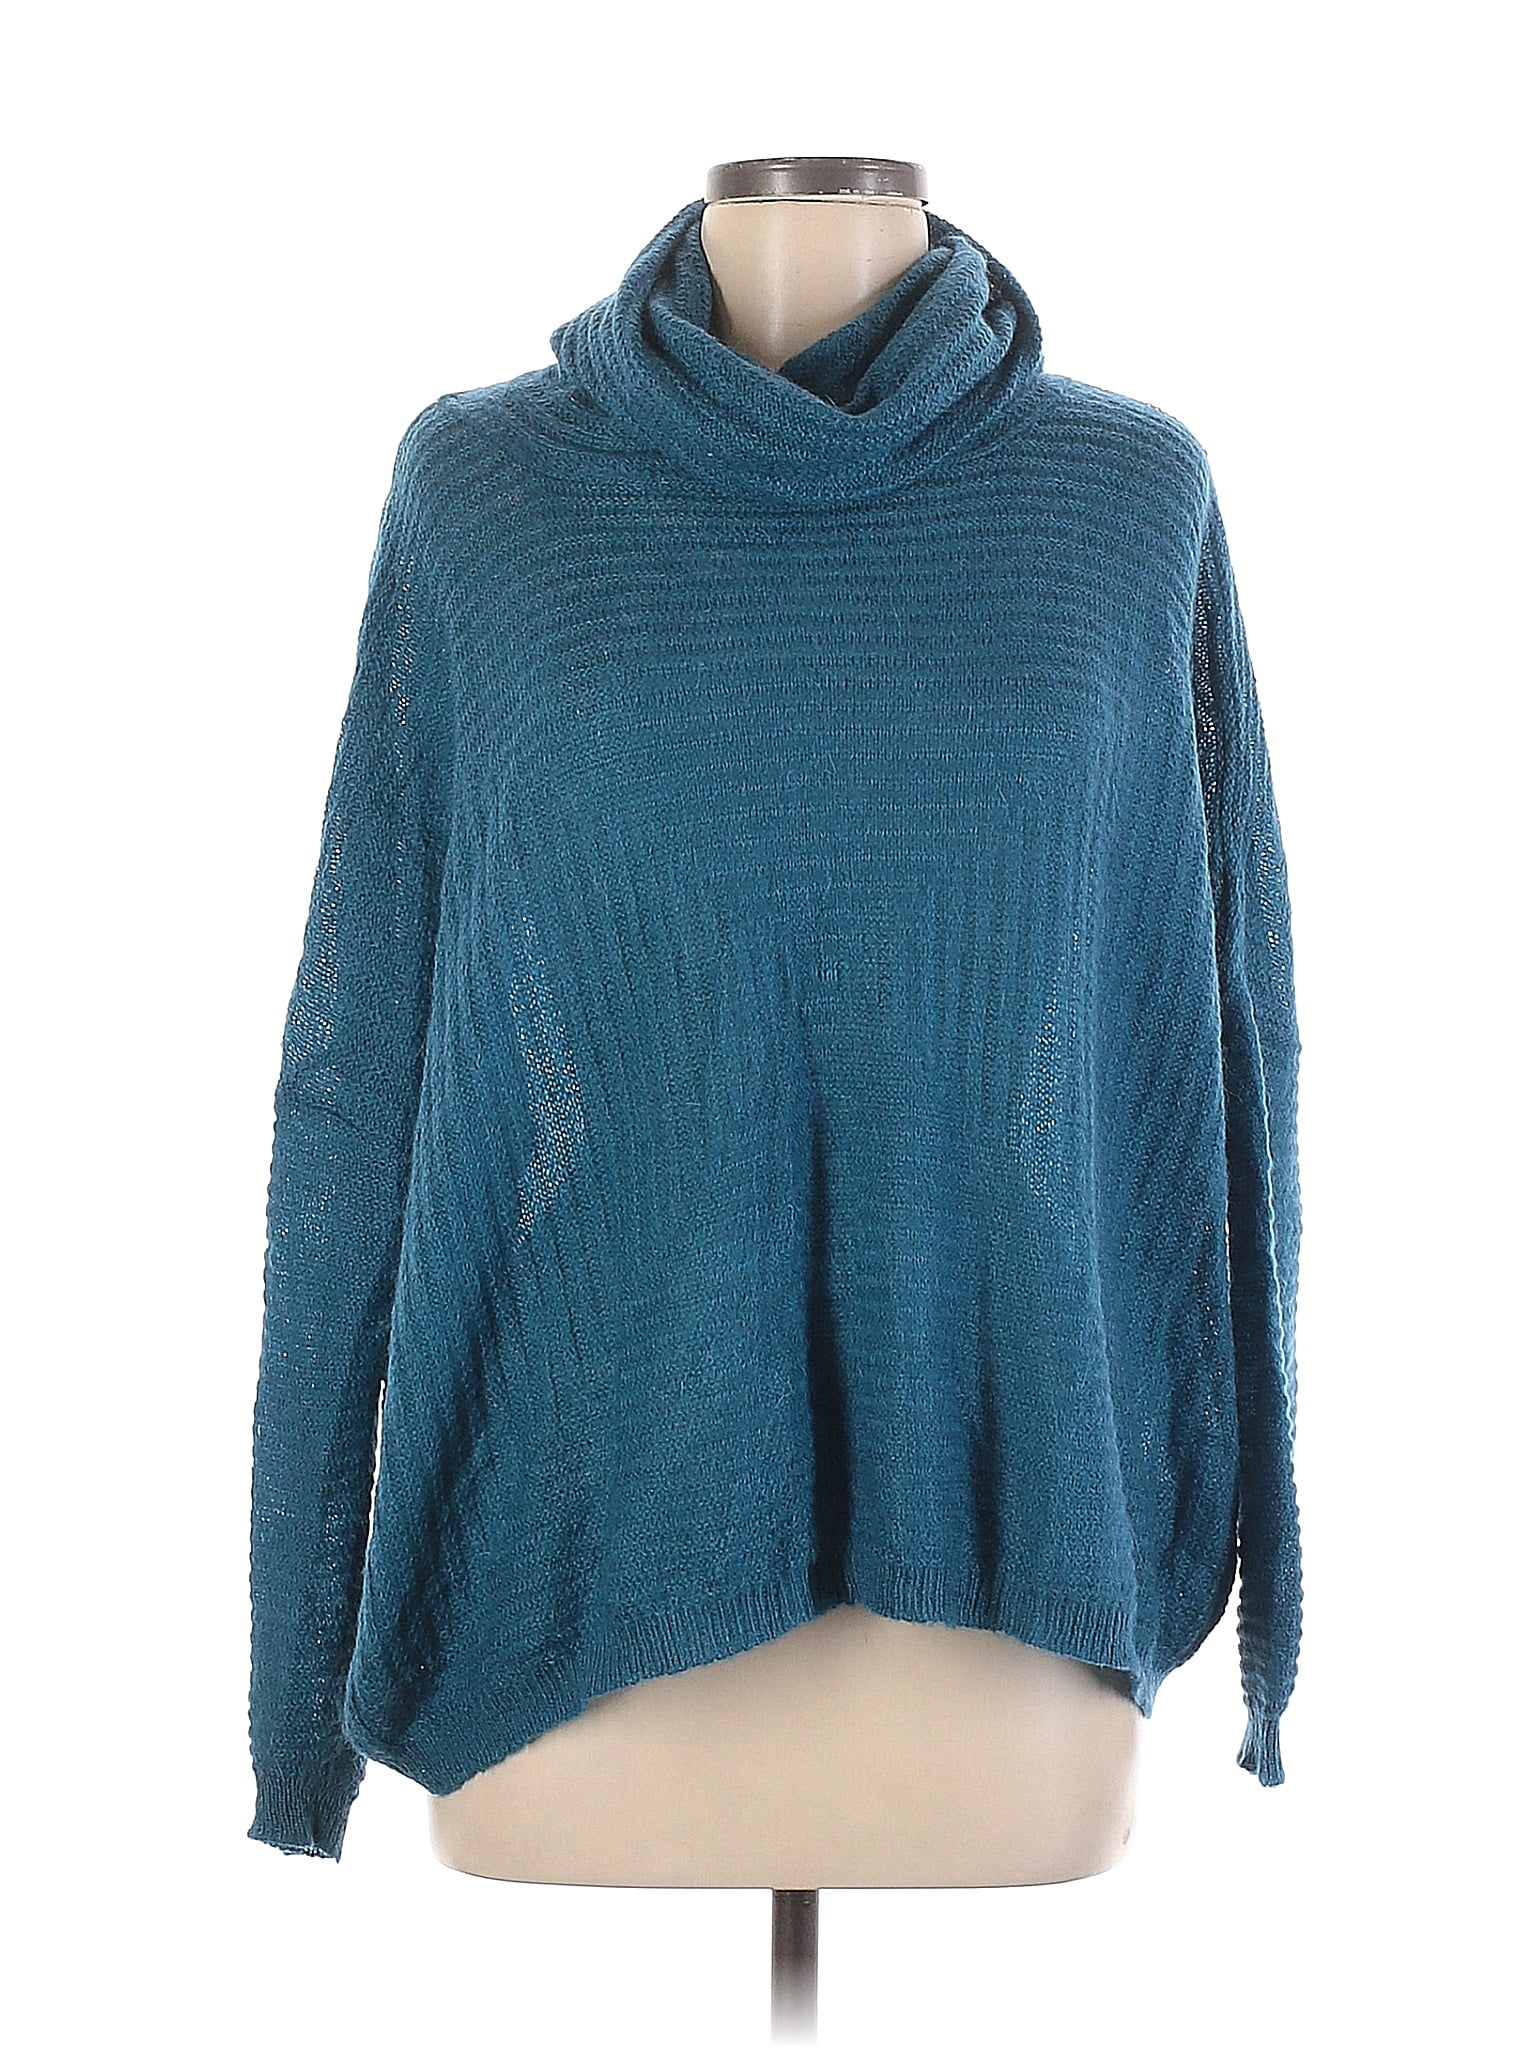 Stile Benetton Color Block Solid Teal Turtleneck Sweater Size M - 78% ...